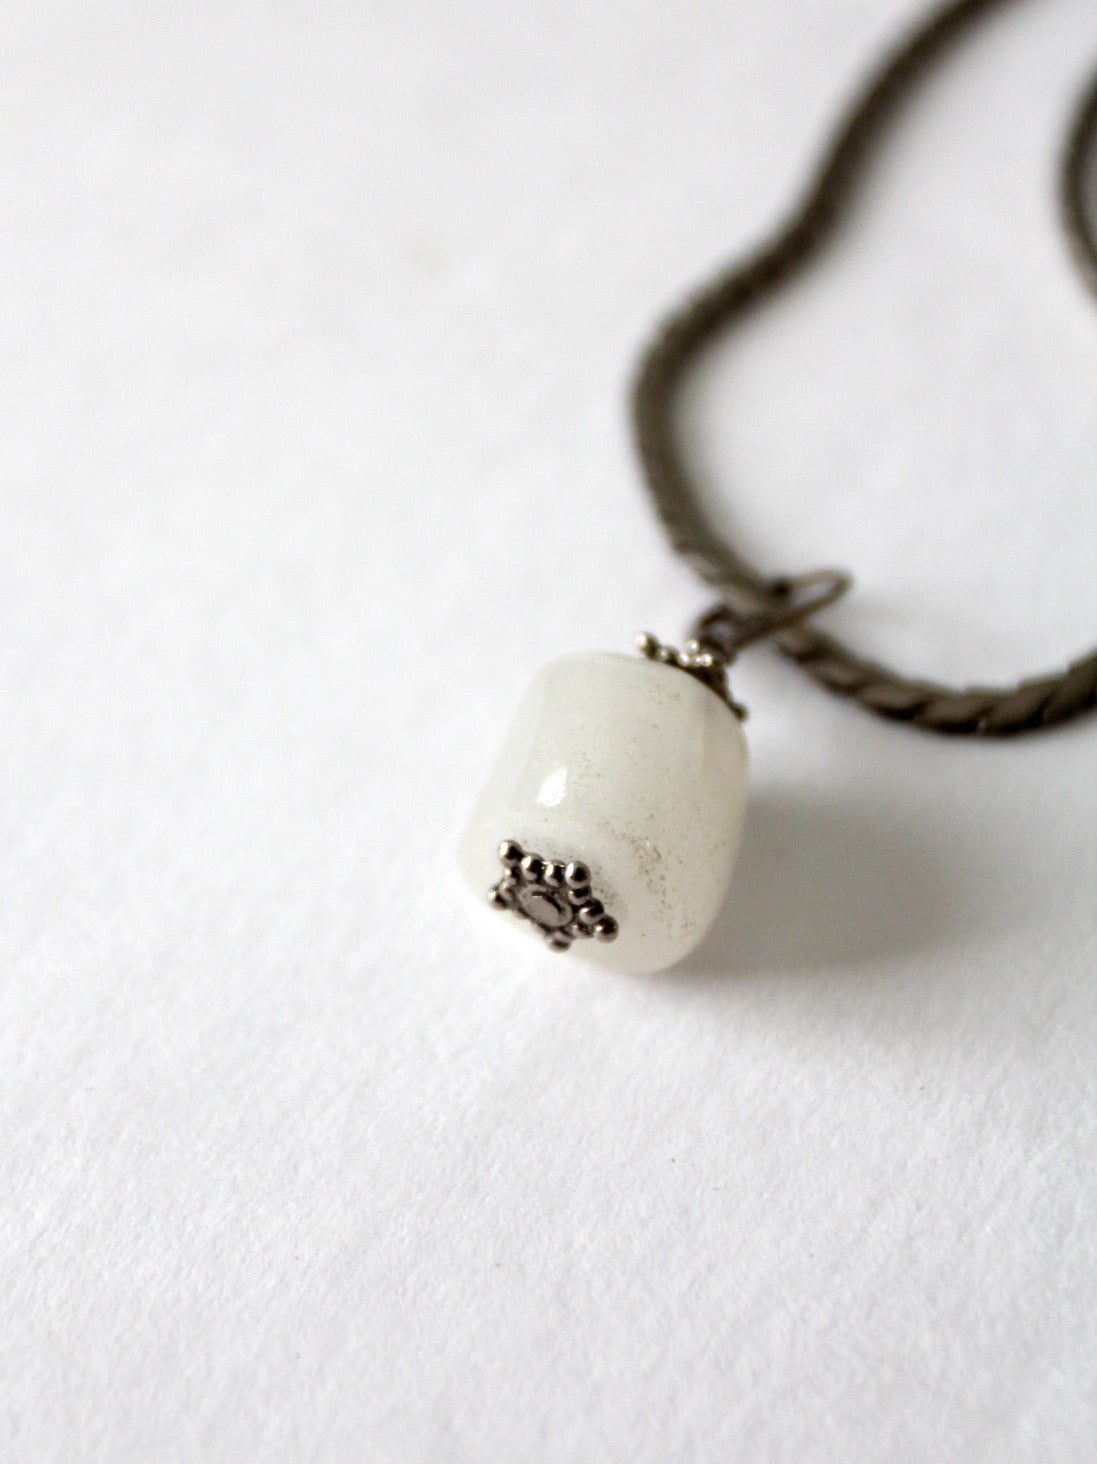 vintage white stone pendant necklace